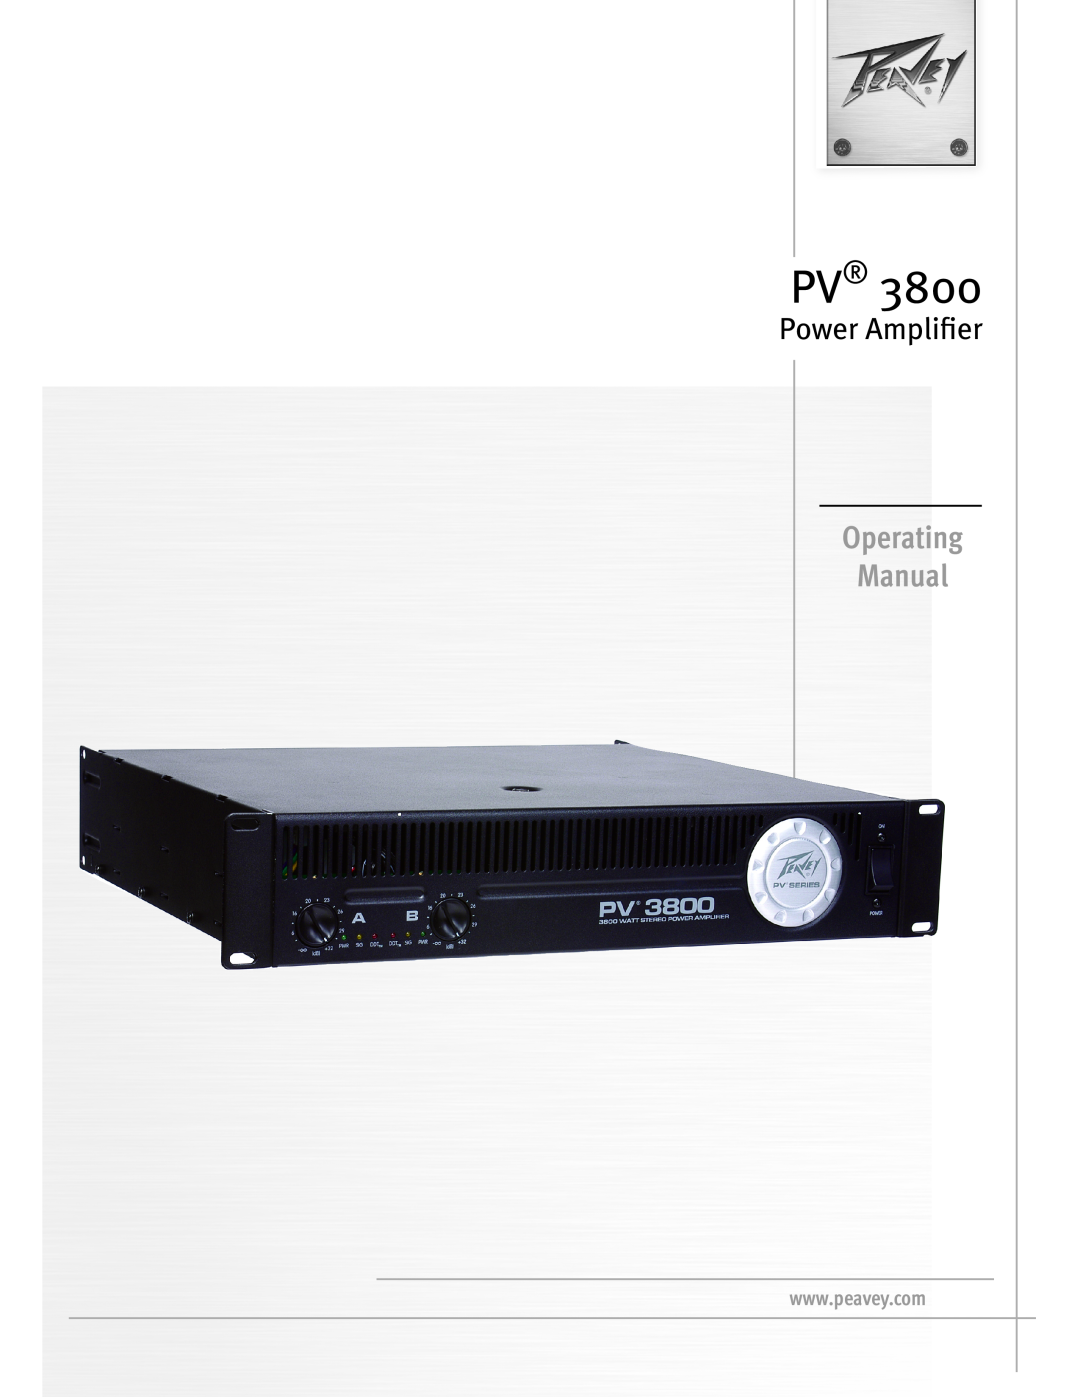 Peavey PV 3800 manual Operating Manual, Power Amplifier 